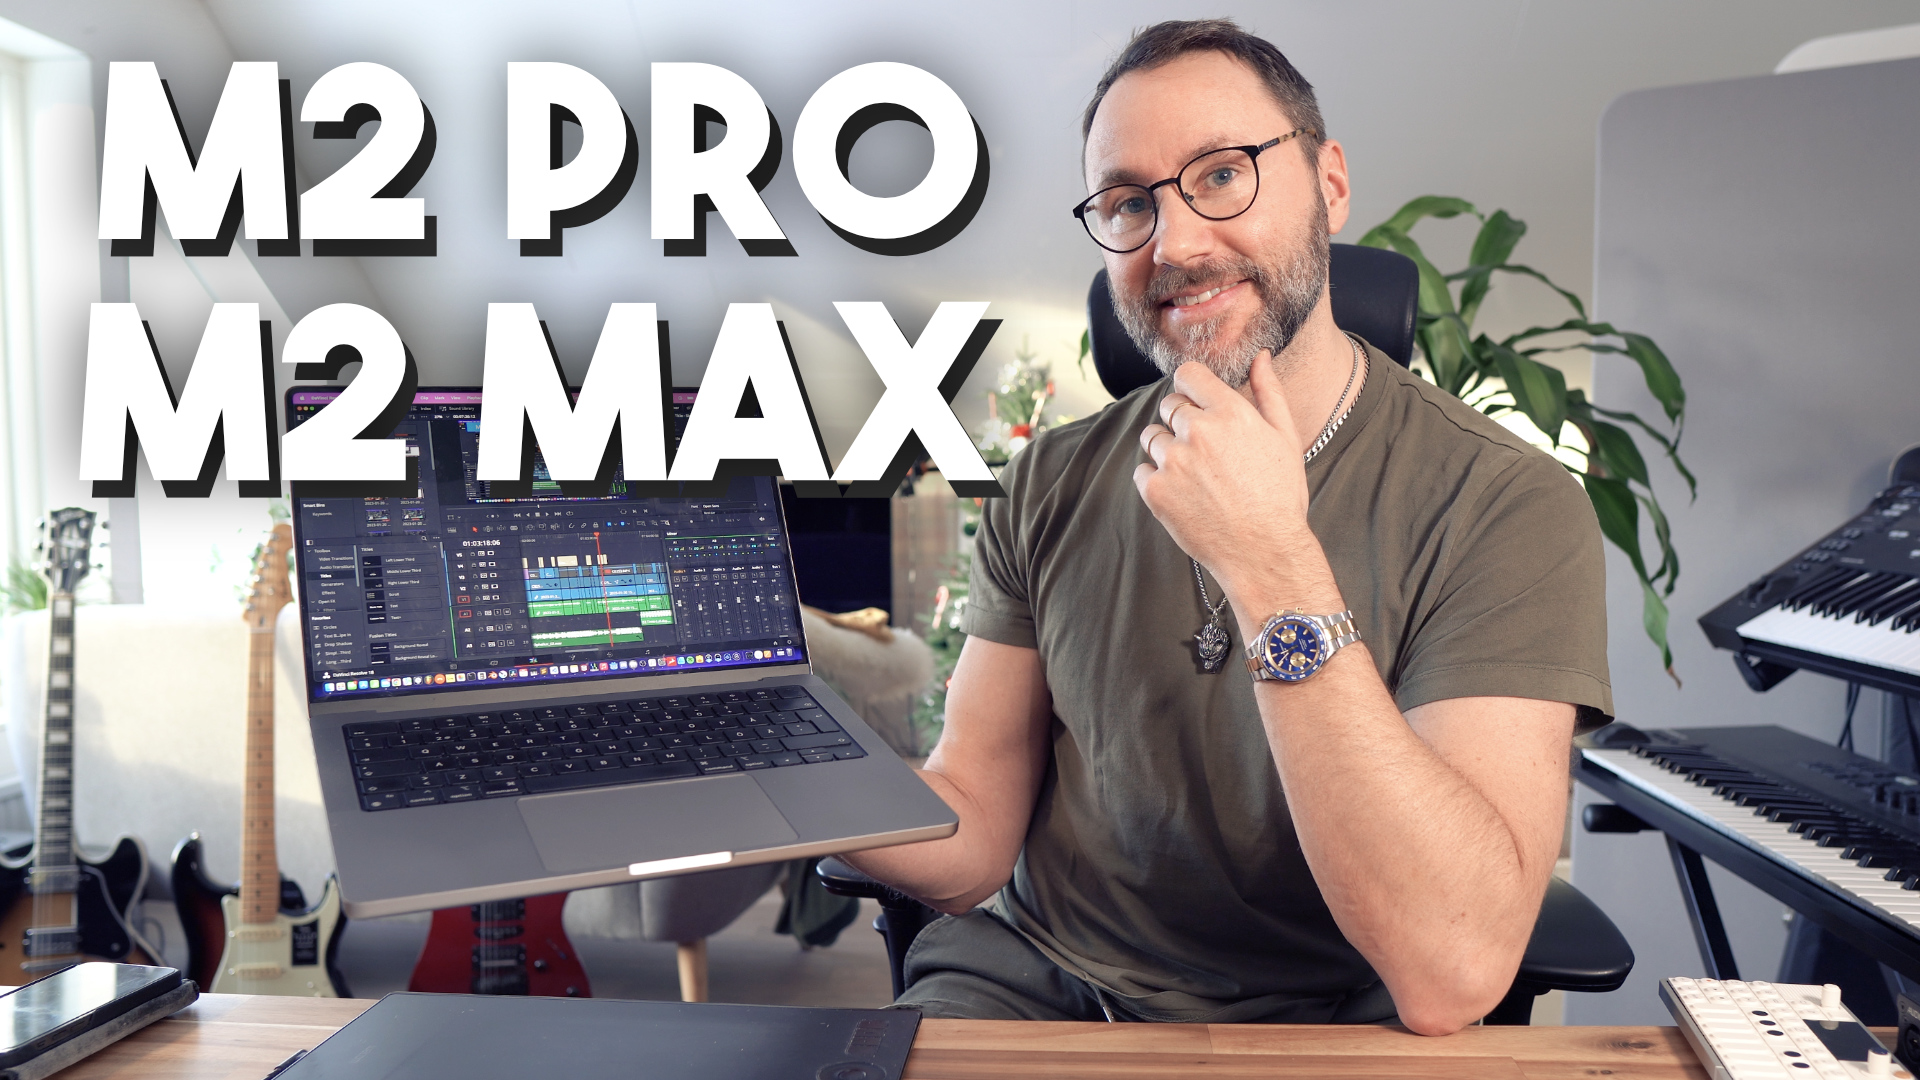 m2 pro and m2 max macbook pro tech news